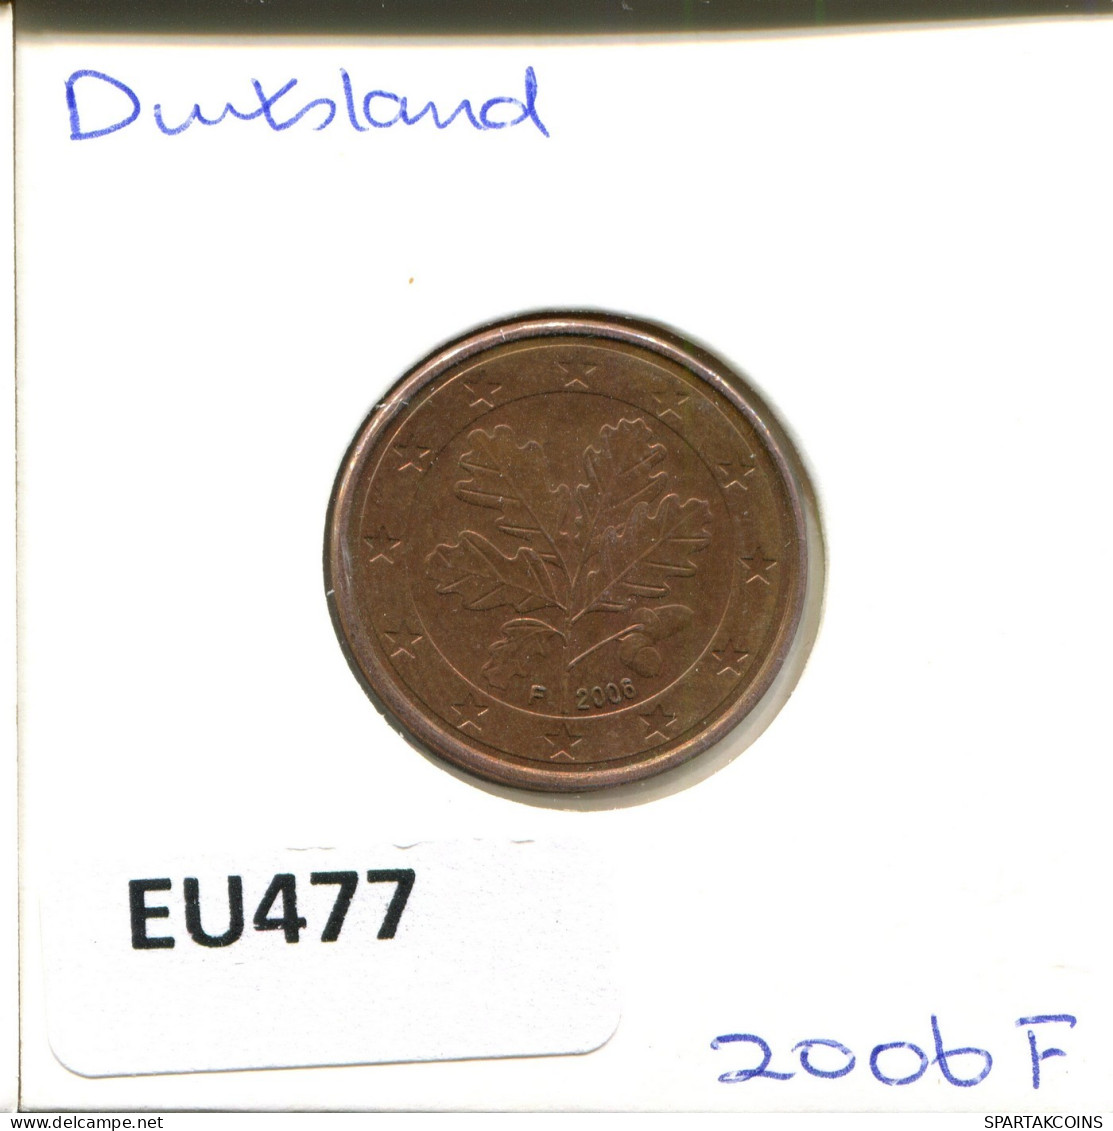 5 EURO CENTS 2006 DEUTSCHLAND Münze GERMANY #EU477.D.A - Allemagne